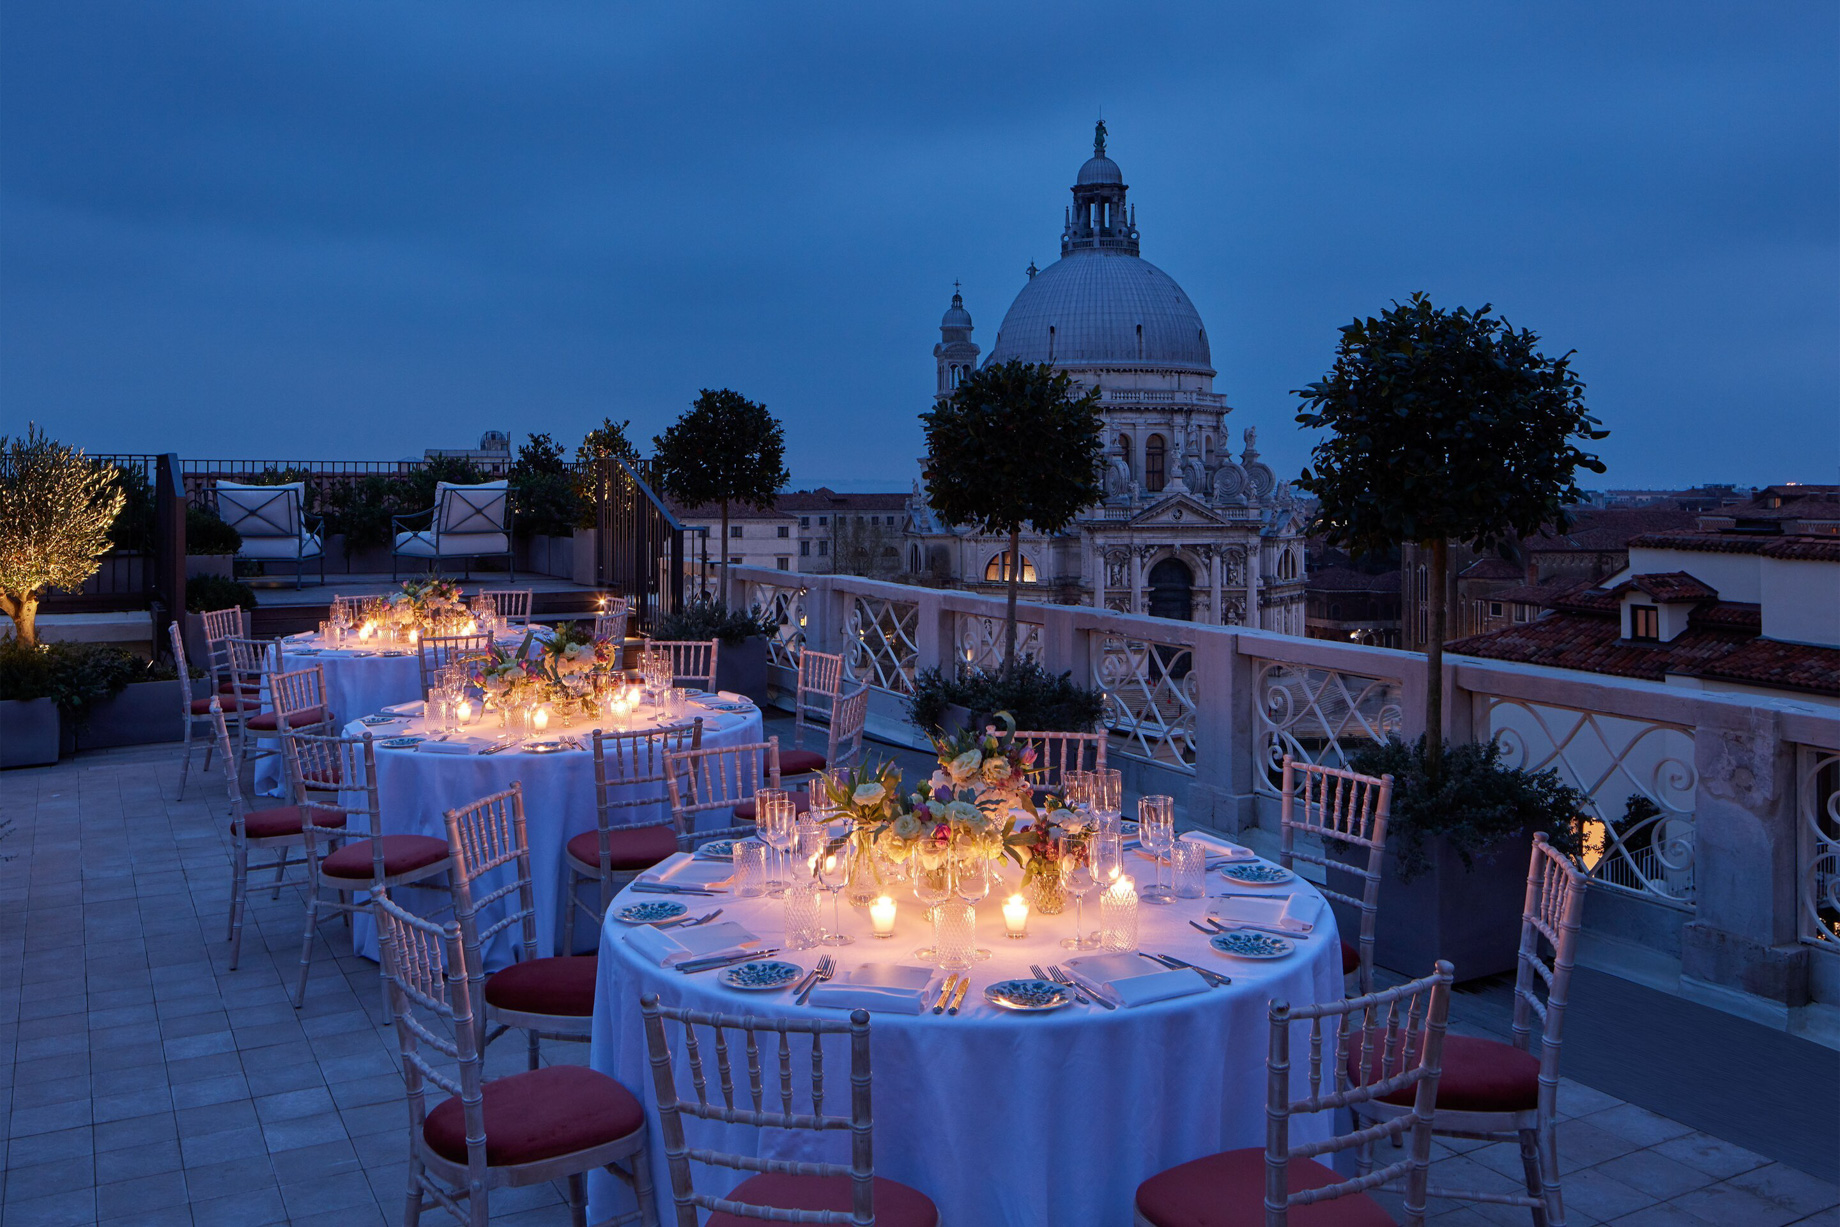 The St. Regis Venice Hotel – Venice, Italy – The Santa Maria Suite Terrace Outdoor Social Setting at Night